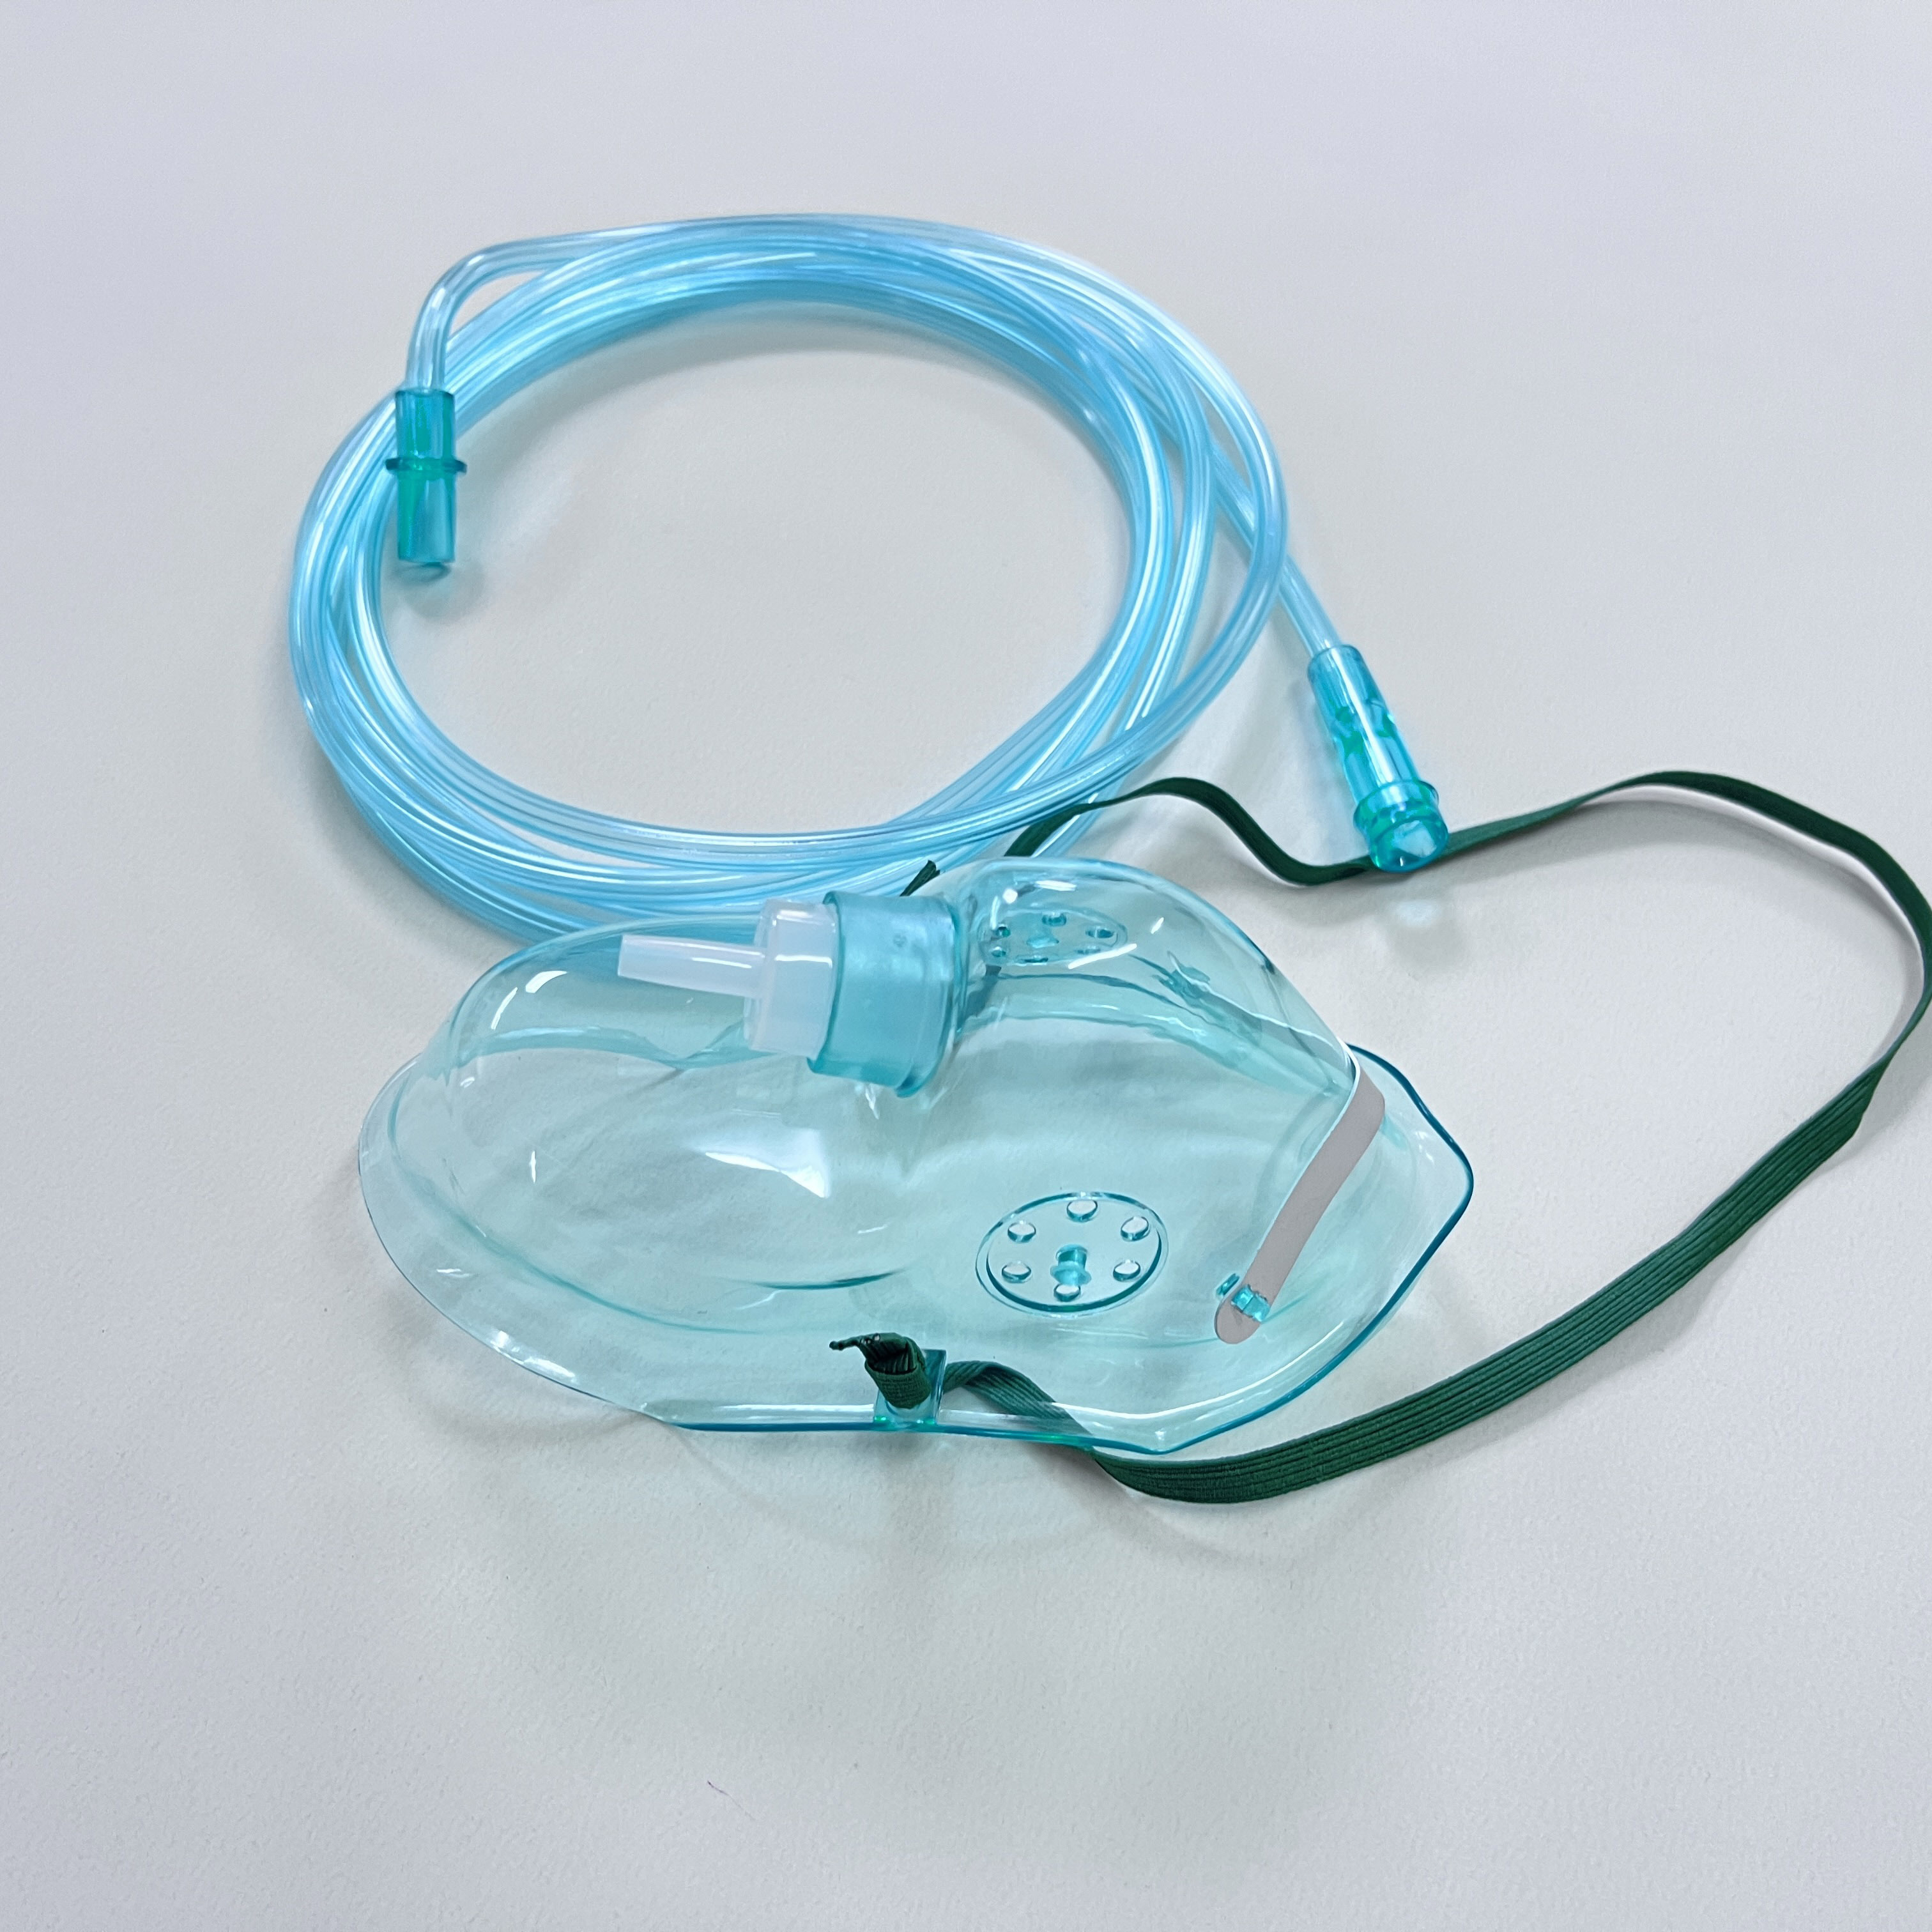 Maschera di ossigeno per adulti e pediatrici